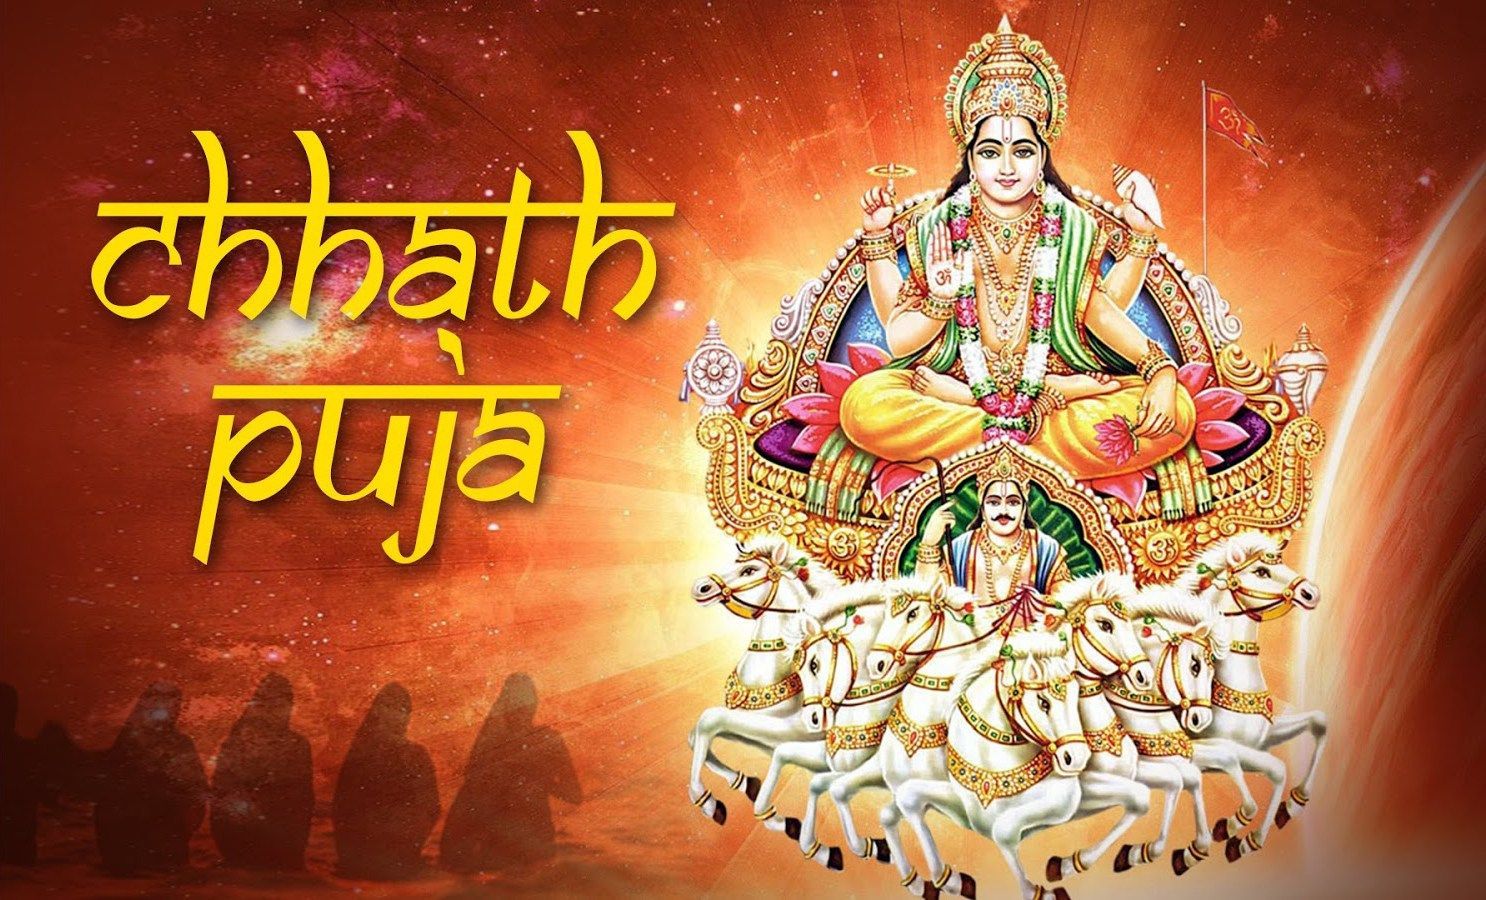 Happy Chhath Puja Wallpaper Download. Happy chhath puja, Chhath puja wallpaper, Chhath puja wishes